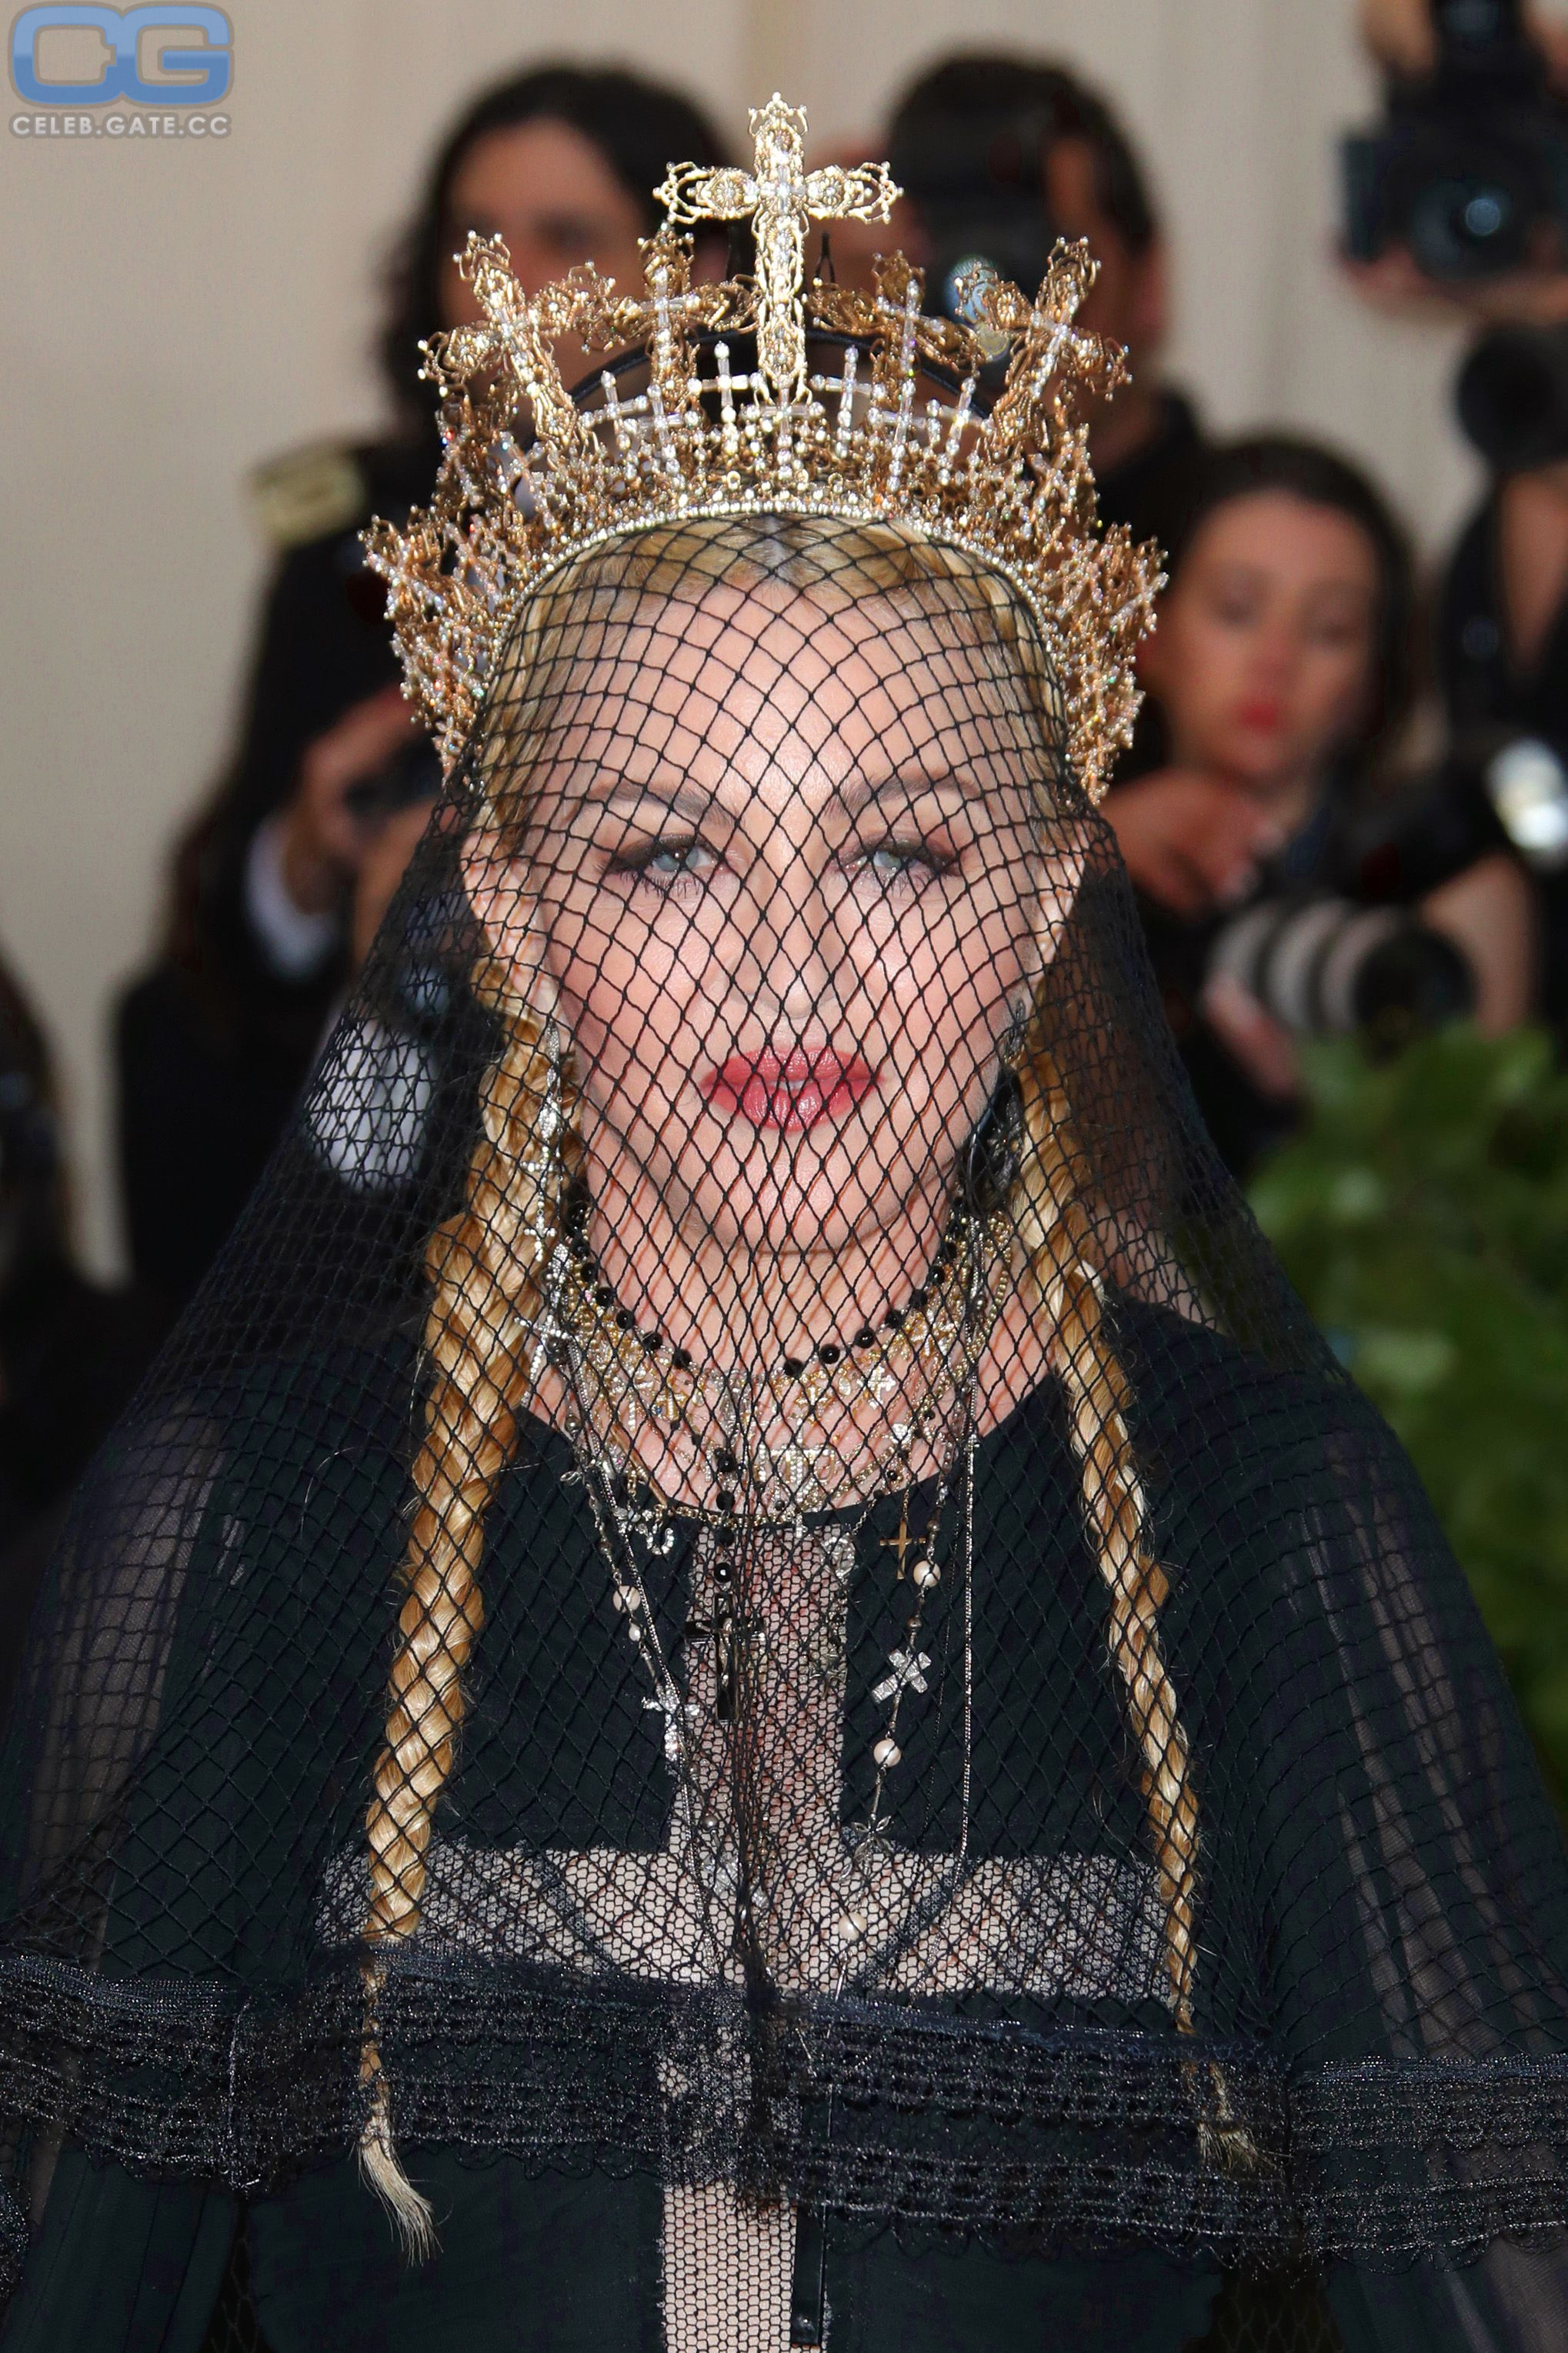 Madonna photo